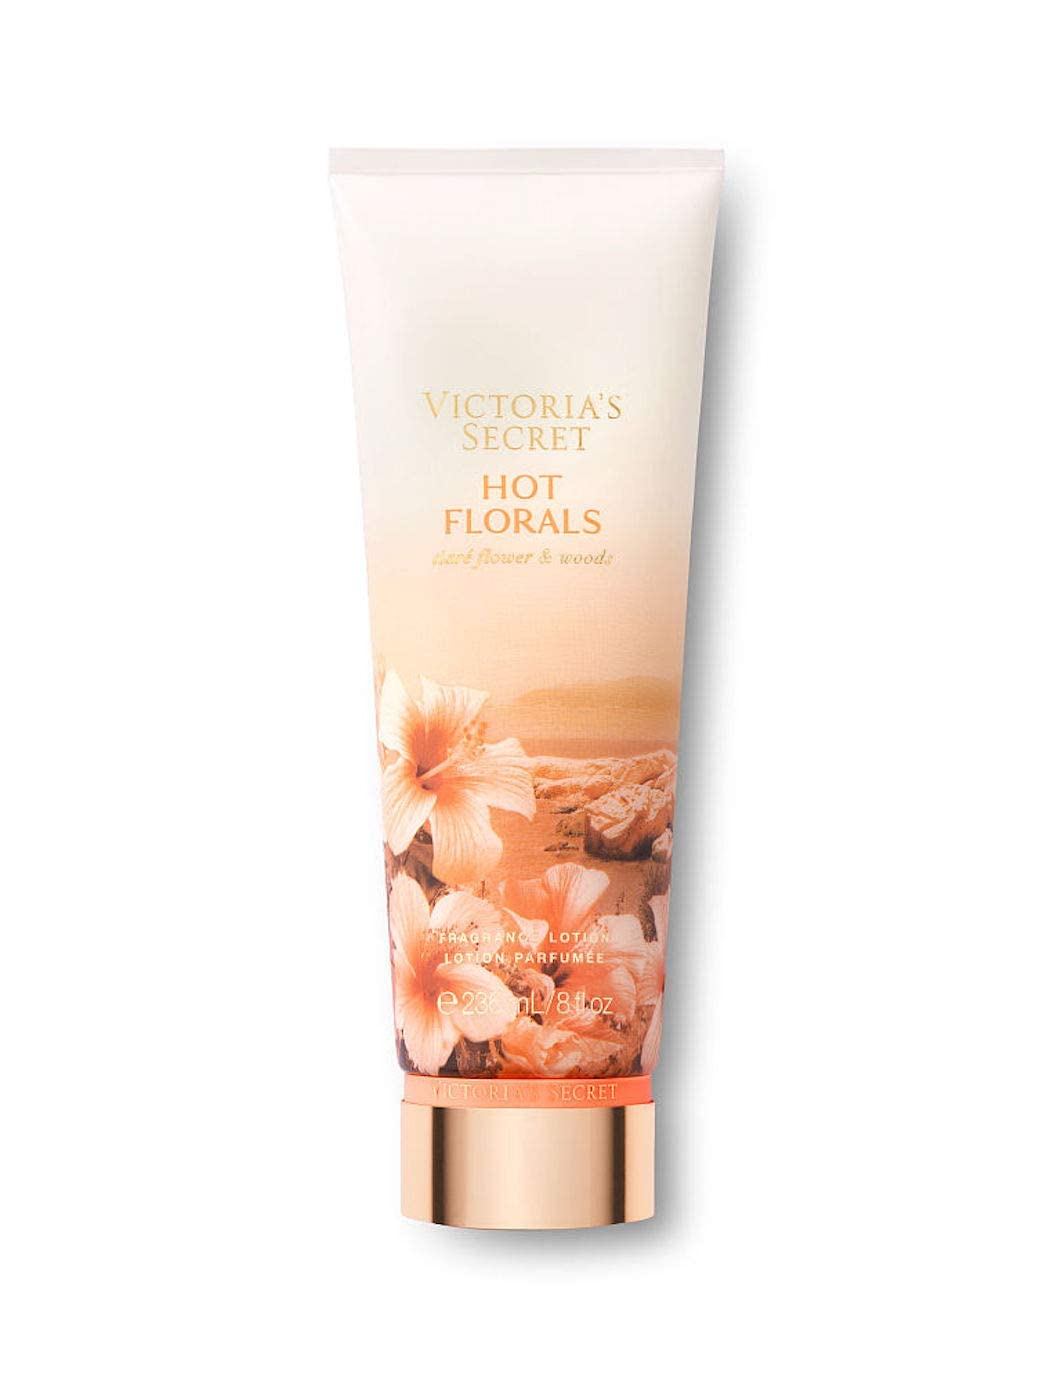 Victoria's Secret “Hot Florals” Body Lotion - Maomor